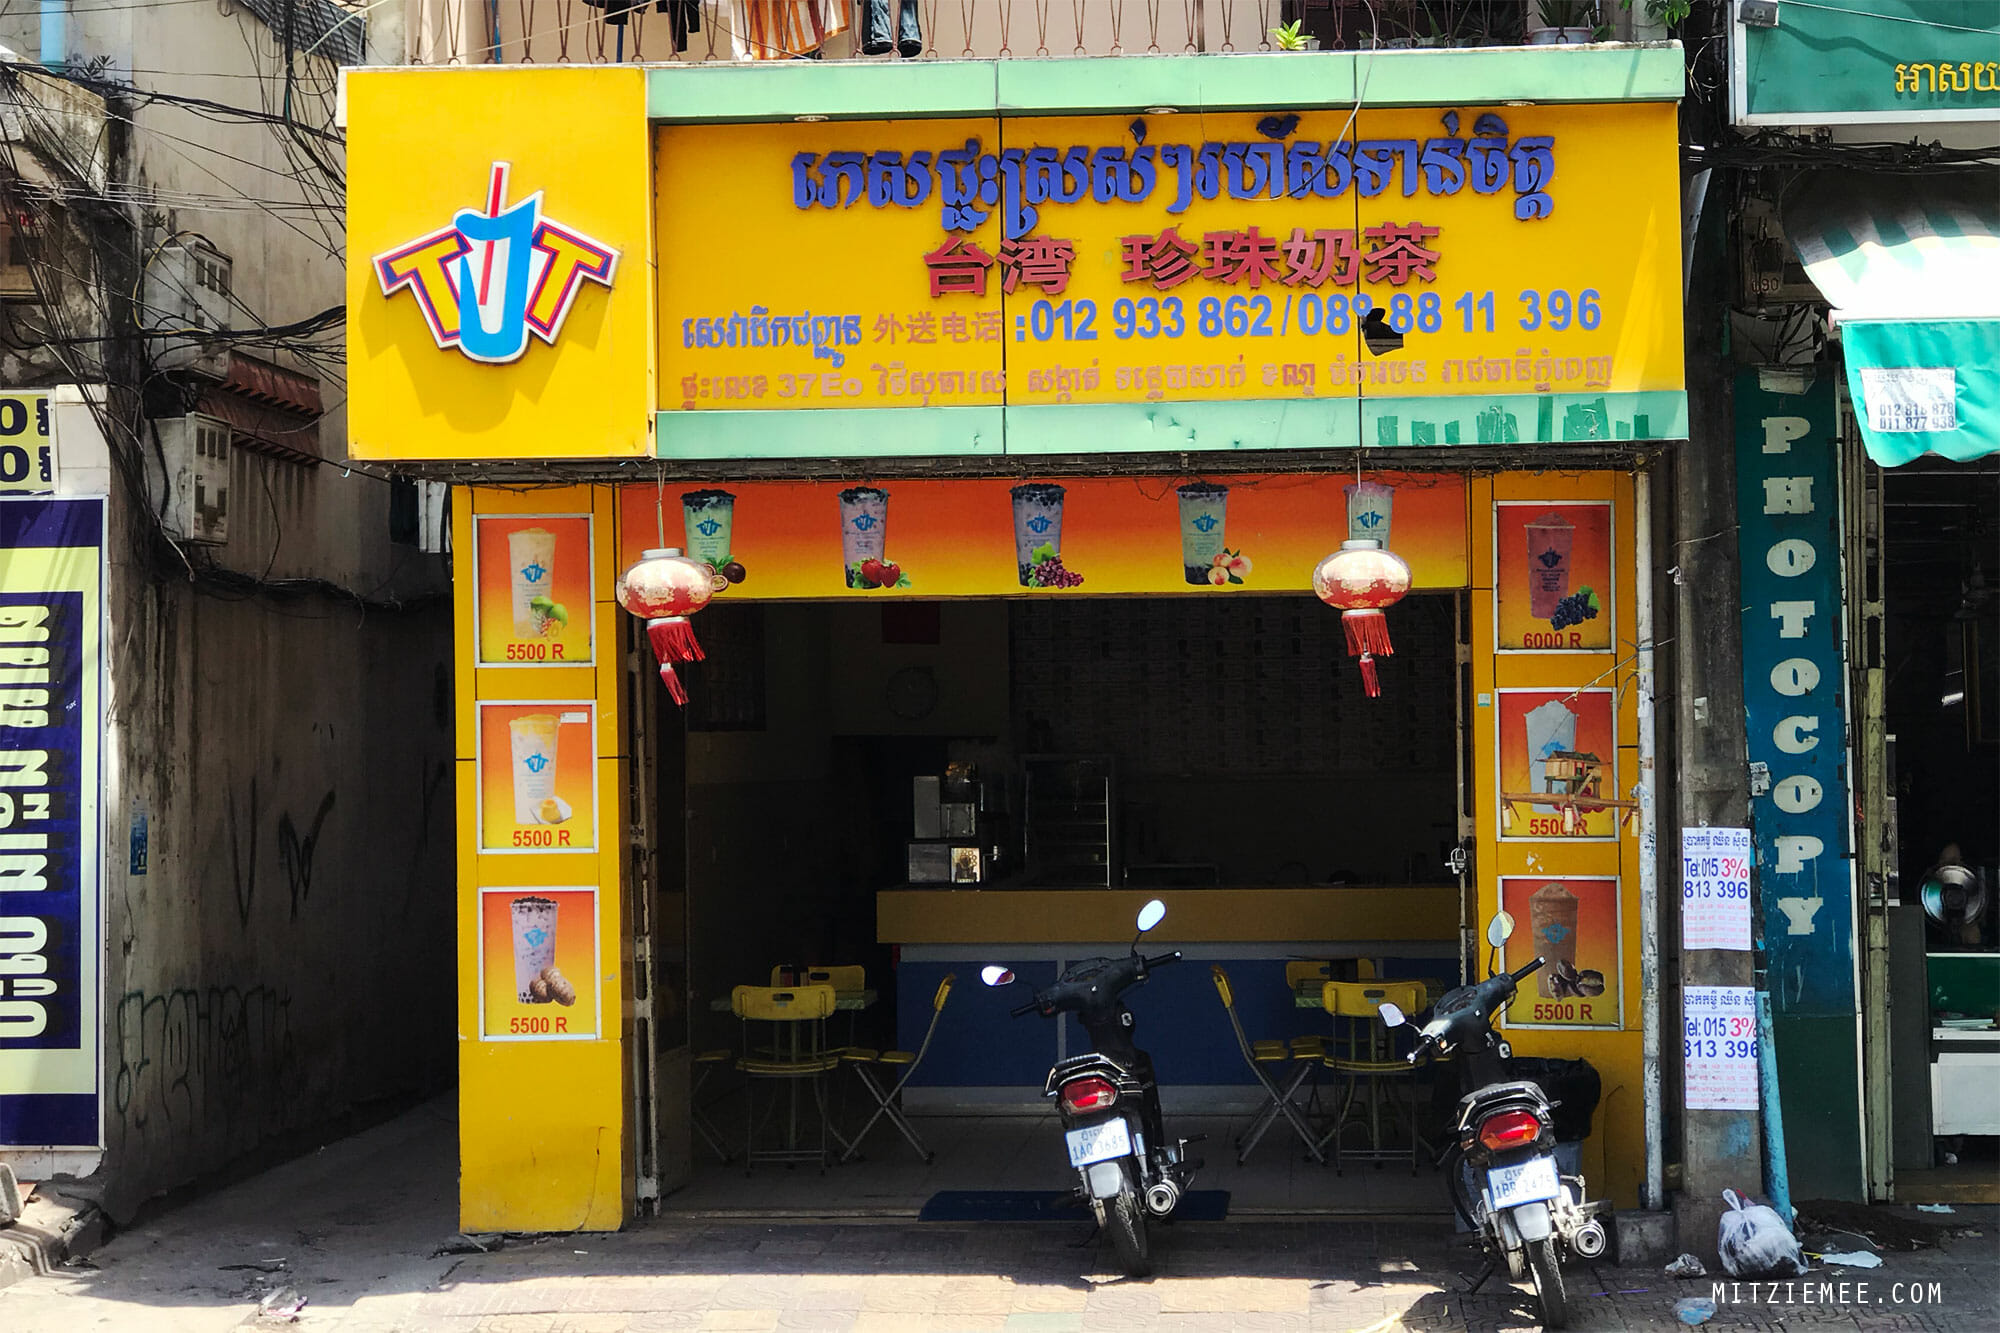 The T&T Taiwan Bubble Tea Shop in Phnom Penh